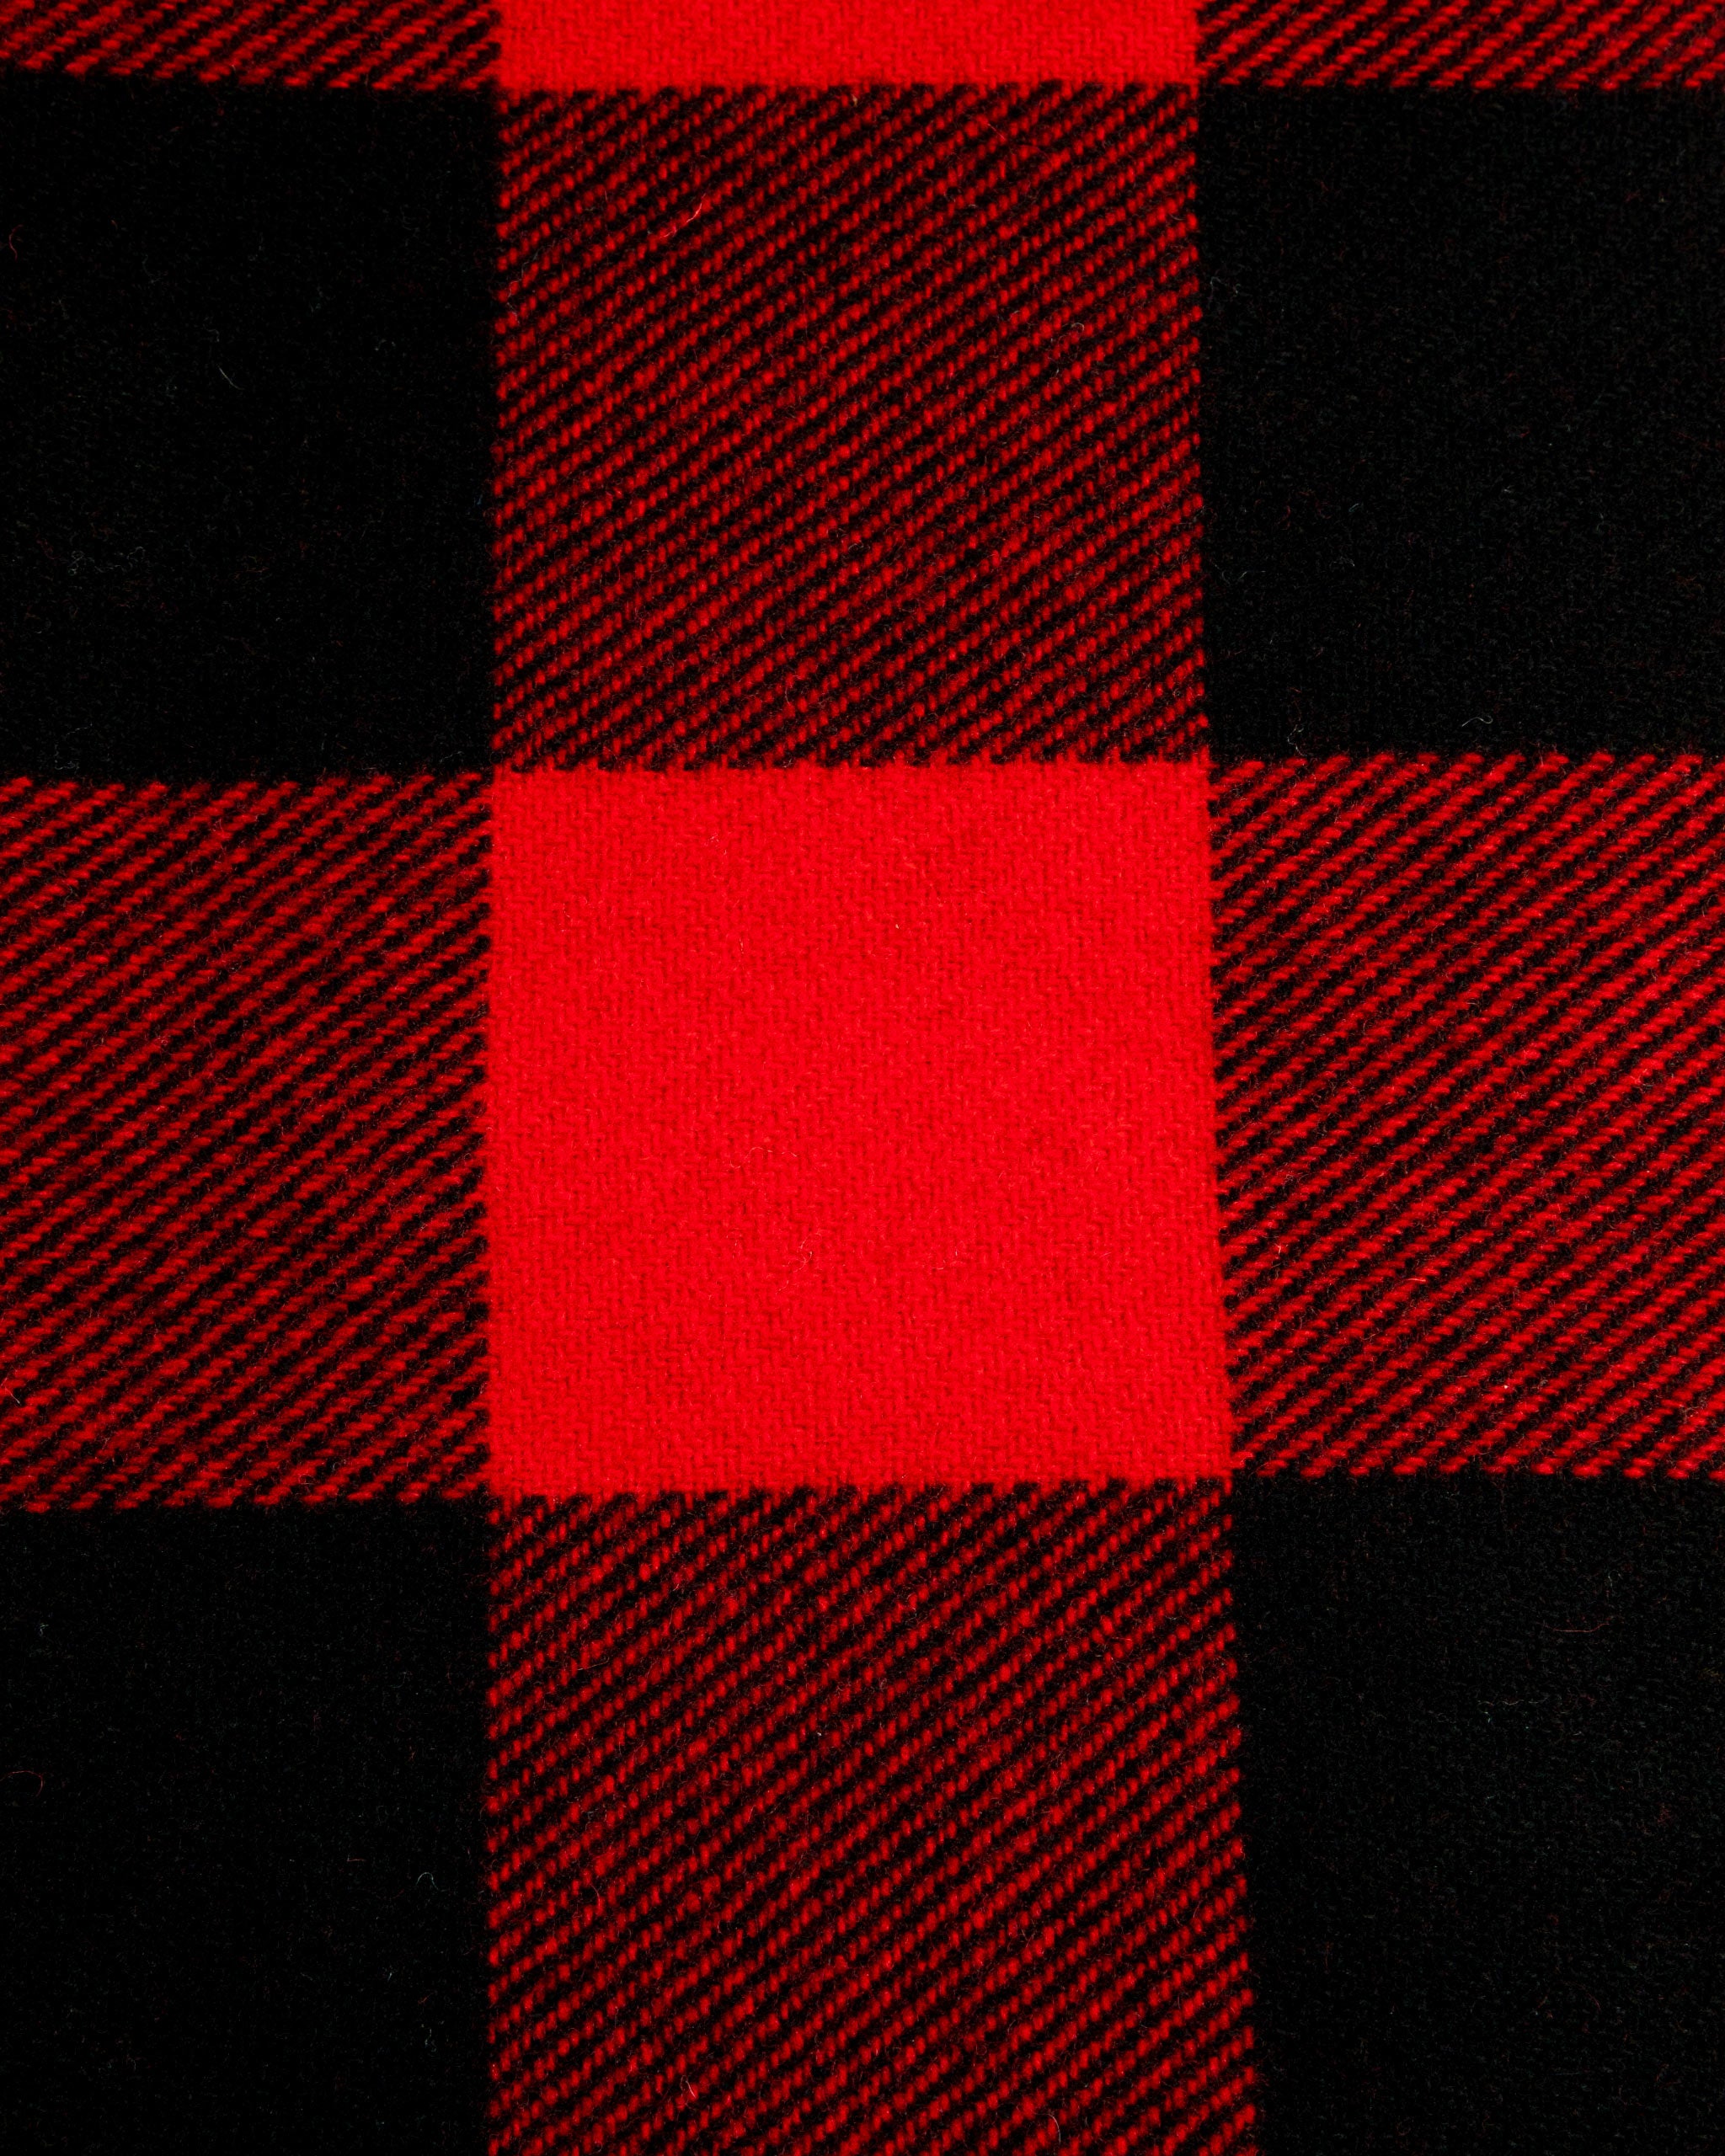 Adam's x Pendleton Red Plaid Blanket